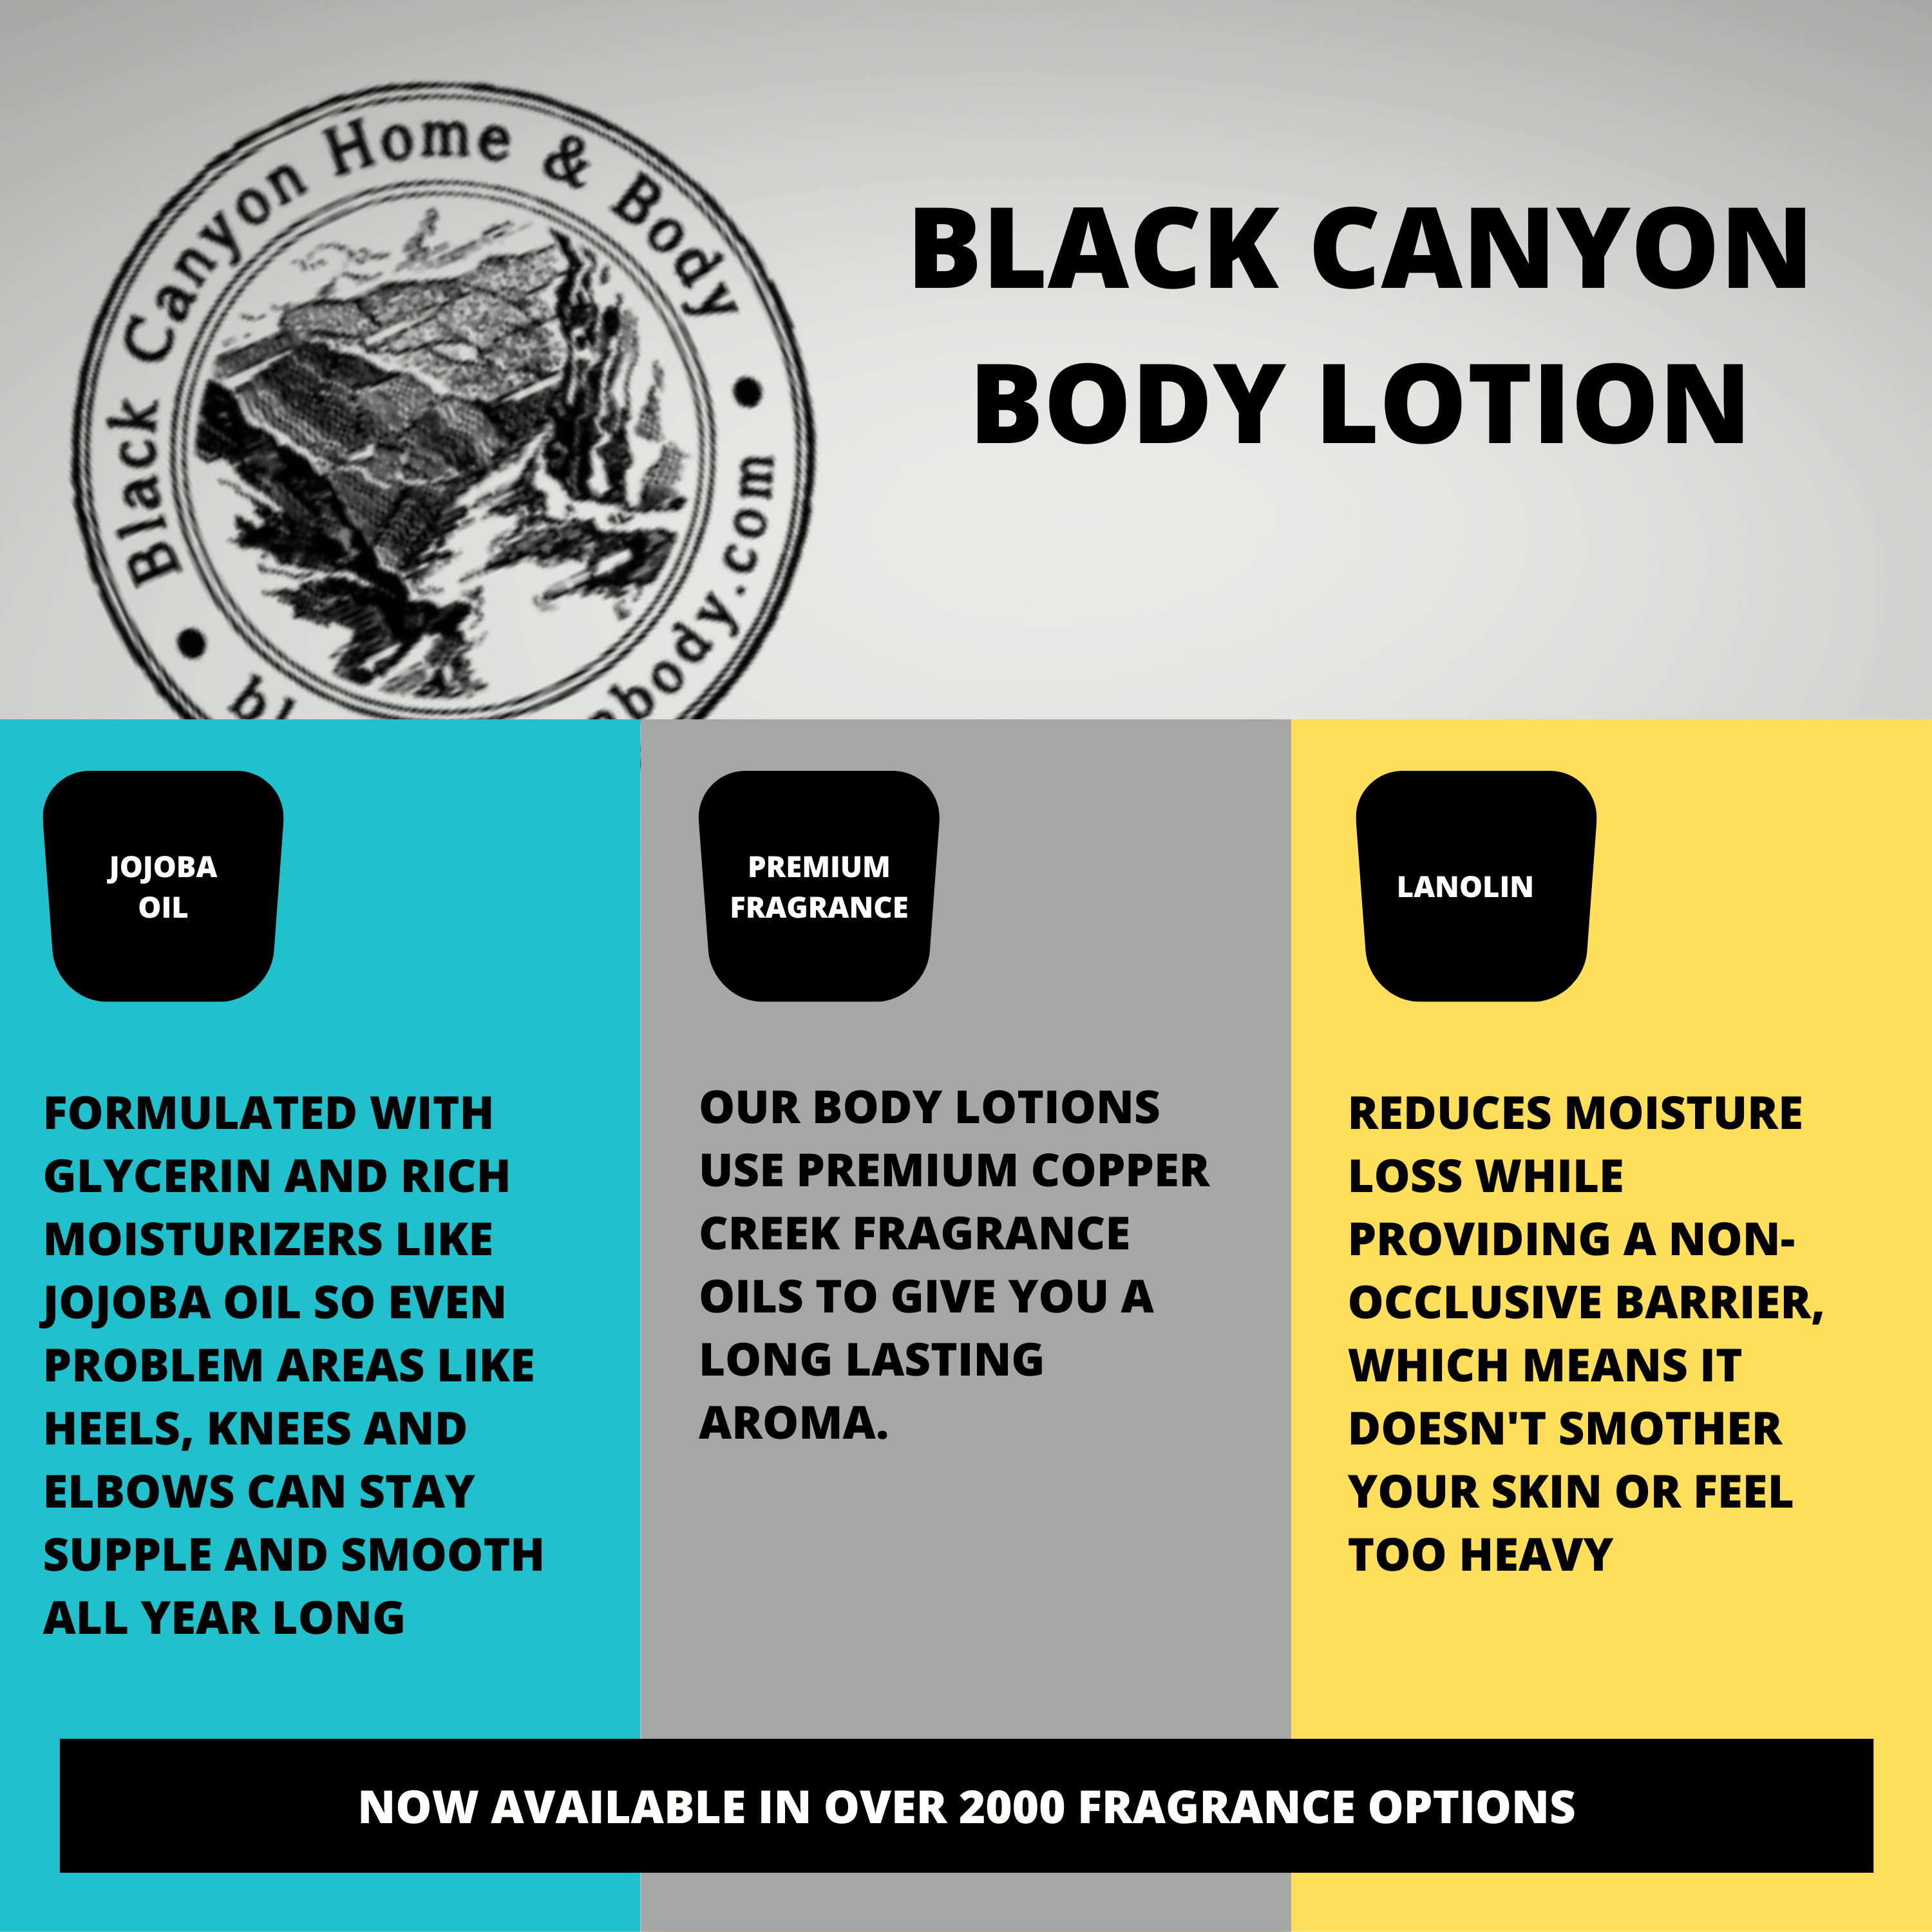 Black Canyon Wild Cherry Vanilla Scented Luxury Body Lotion with Lanolin and Jojoba Oil